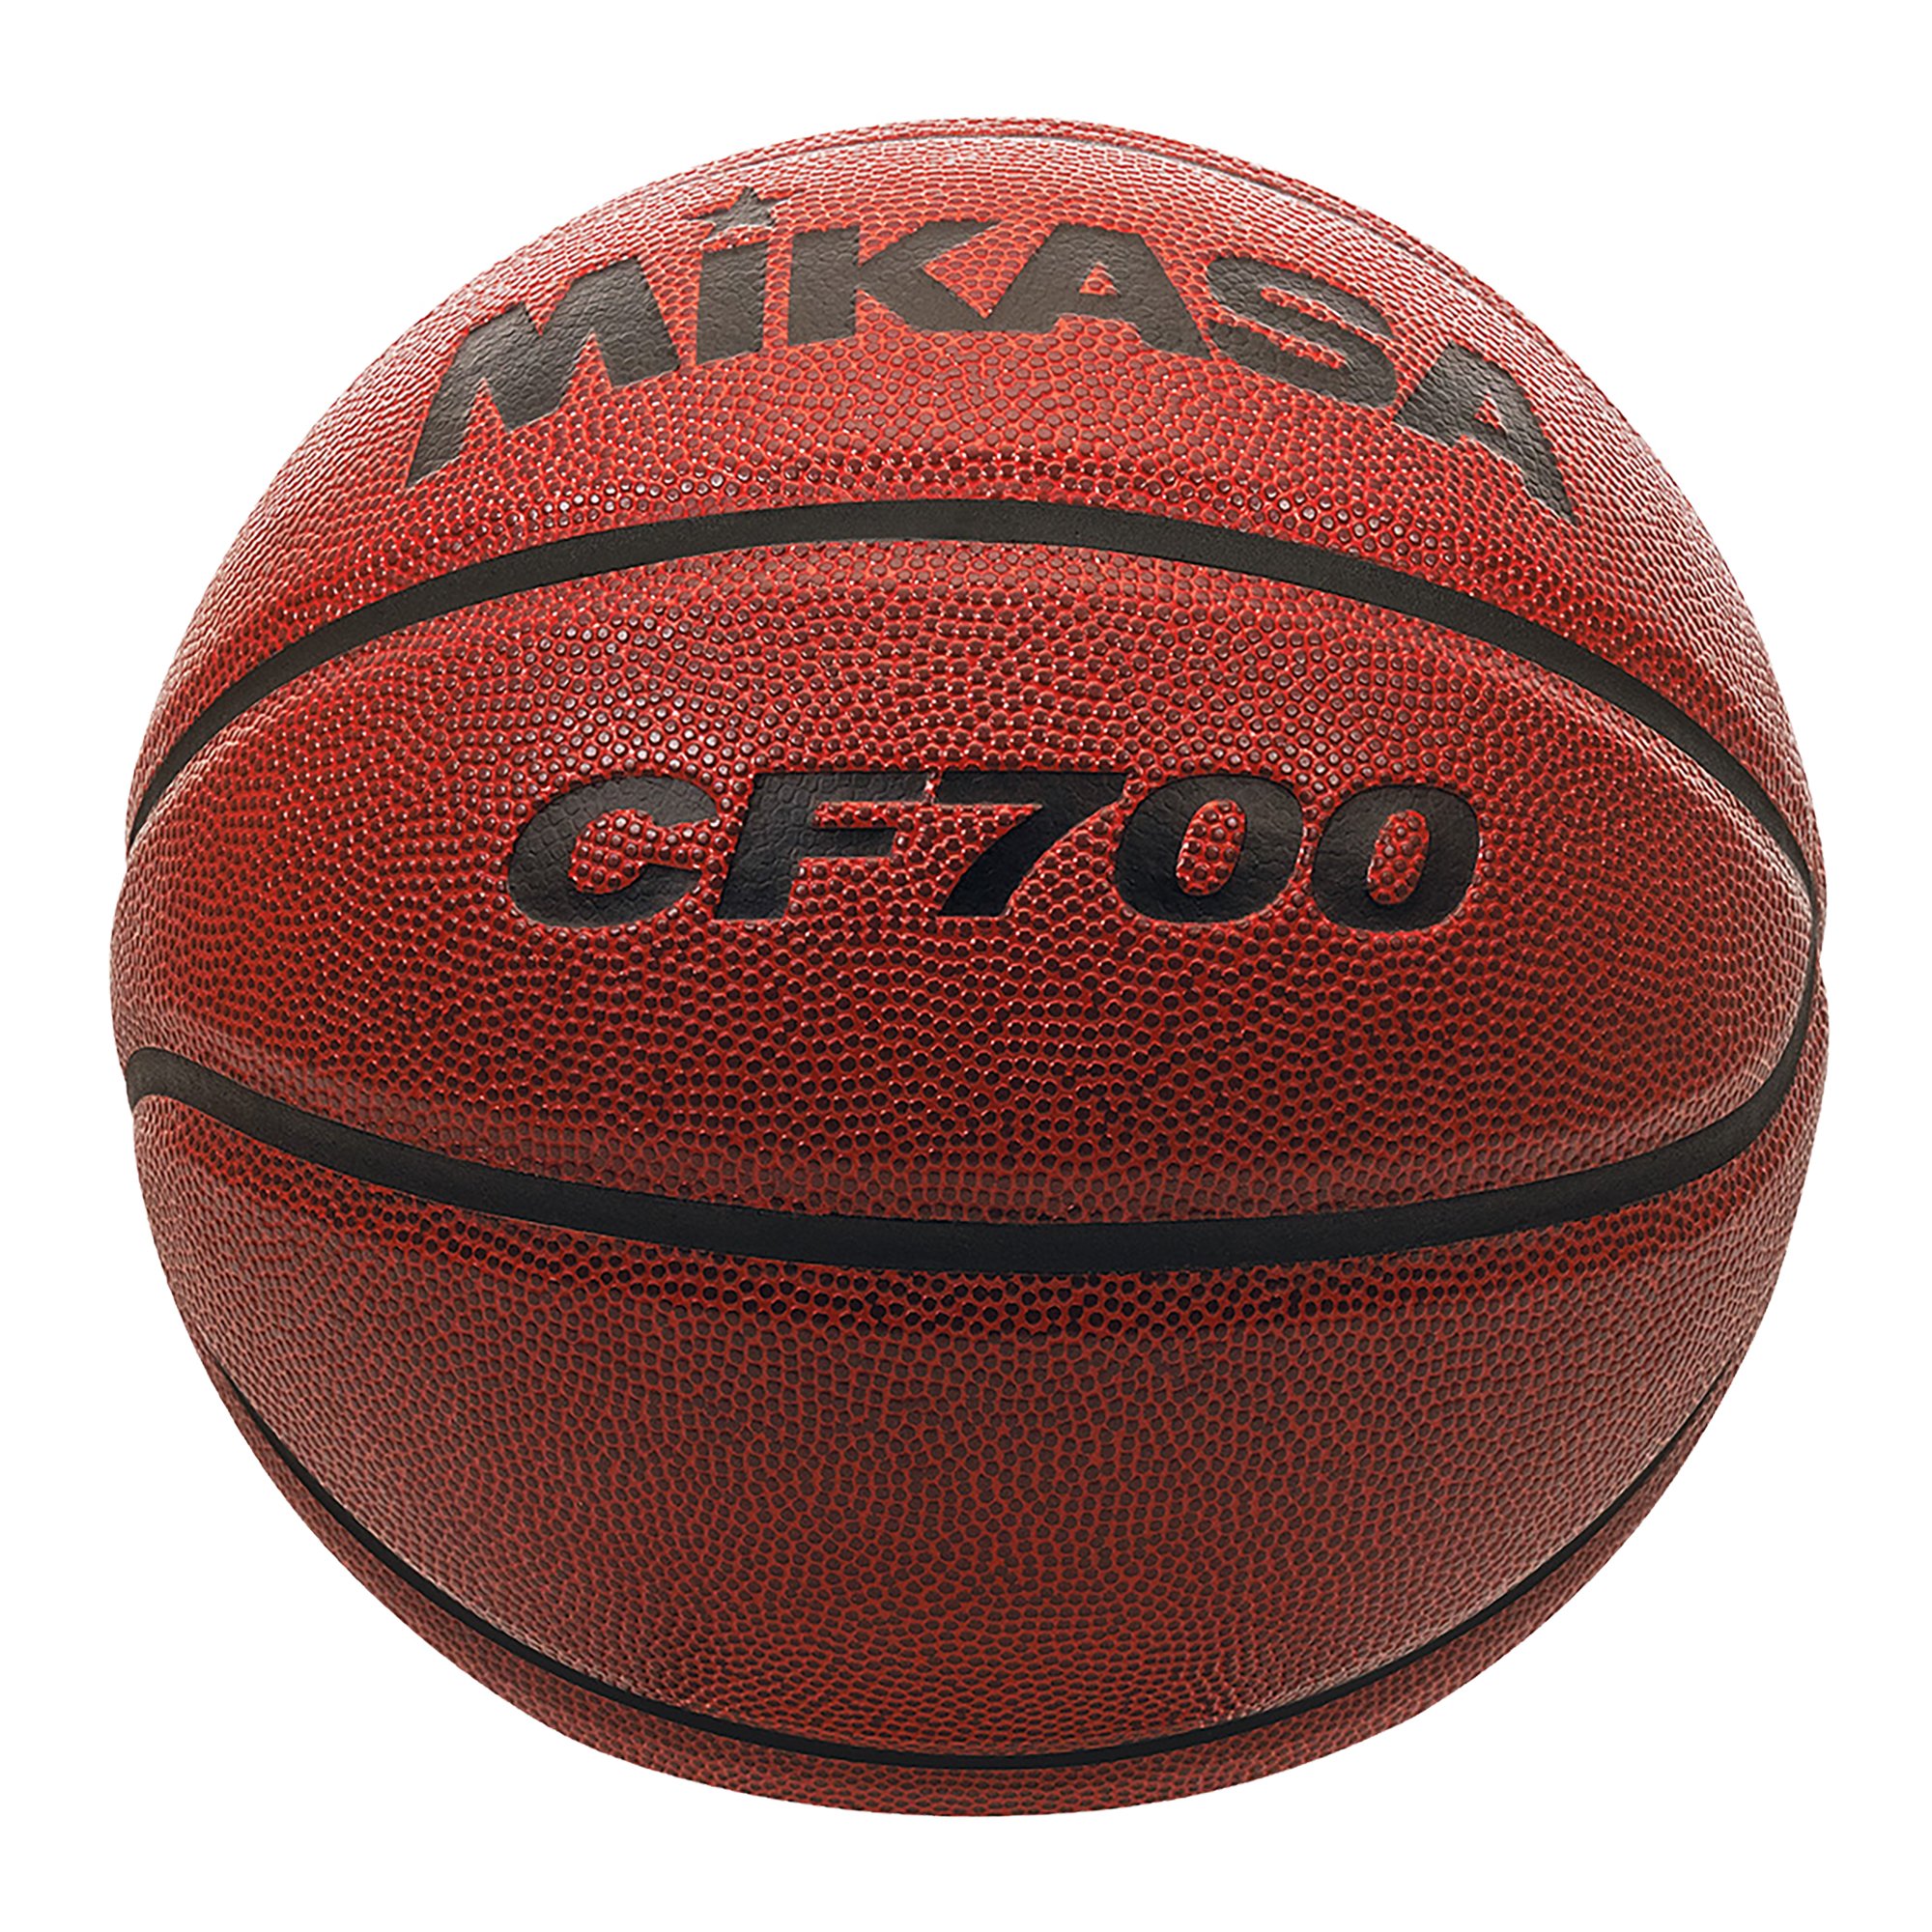 Mikasa Basketball CFX00-DBB